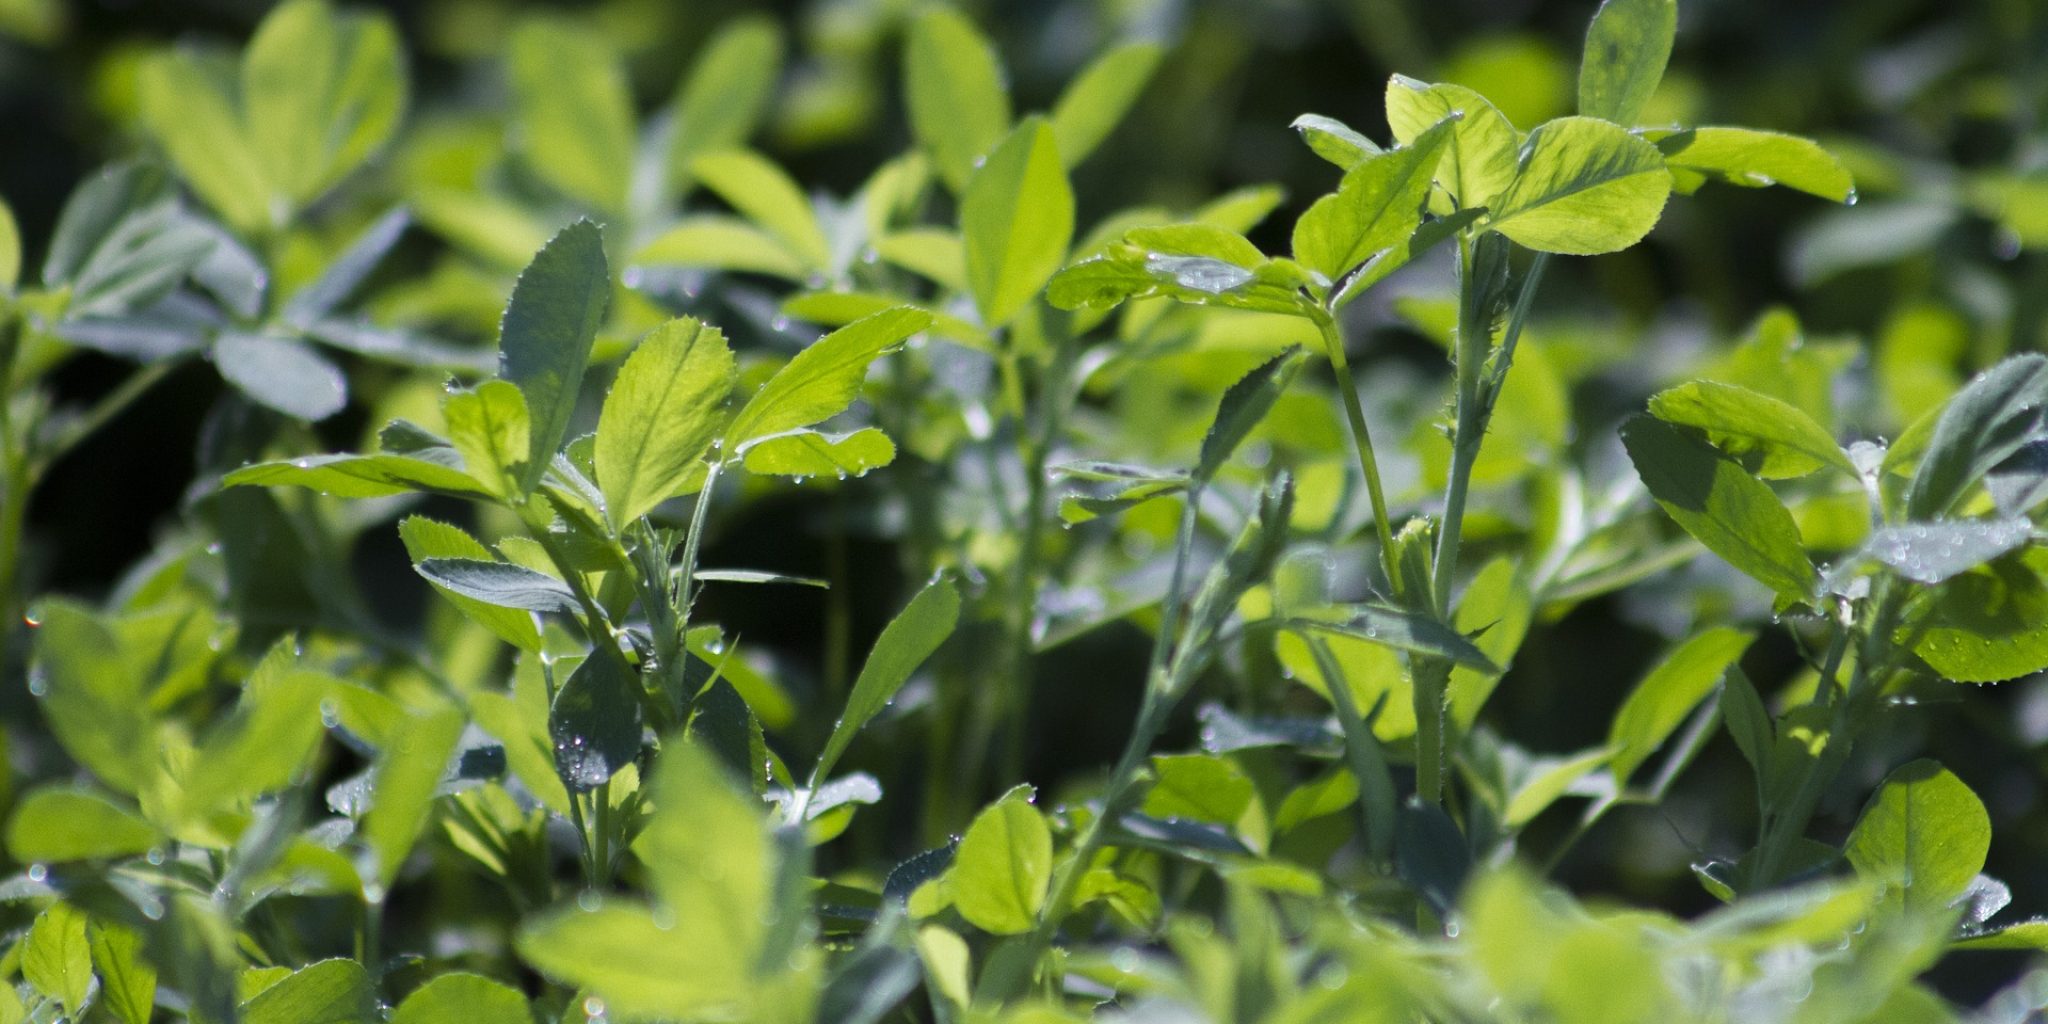 berentsen pasto jardin calidad resistente alfalfa jupiter san miguelito milenia green perene anual forraje temporal riego maiz amarillo blanco